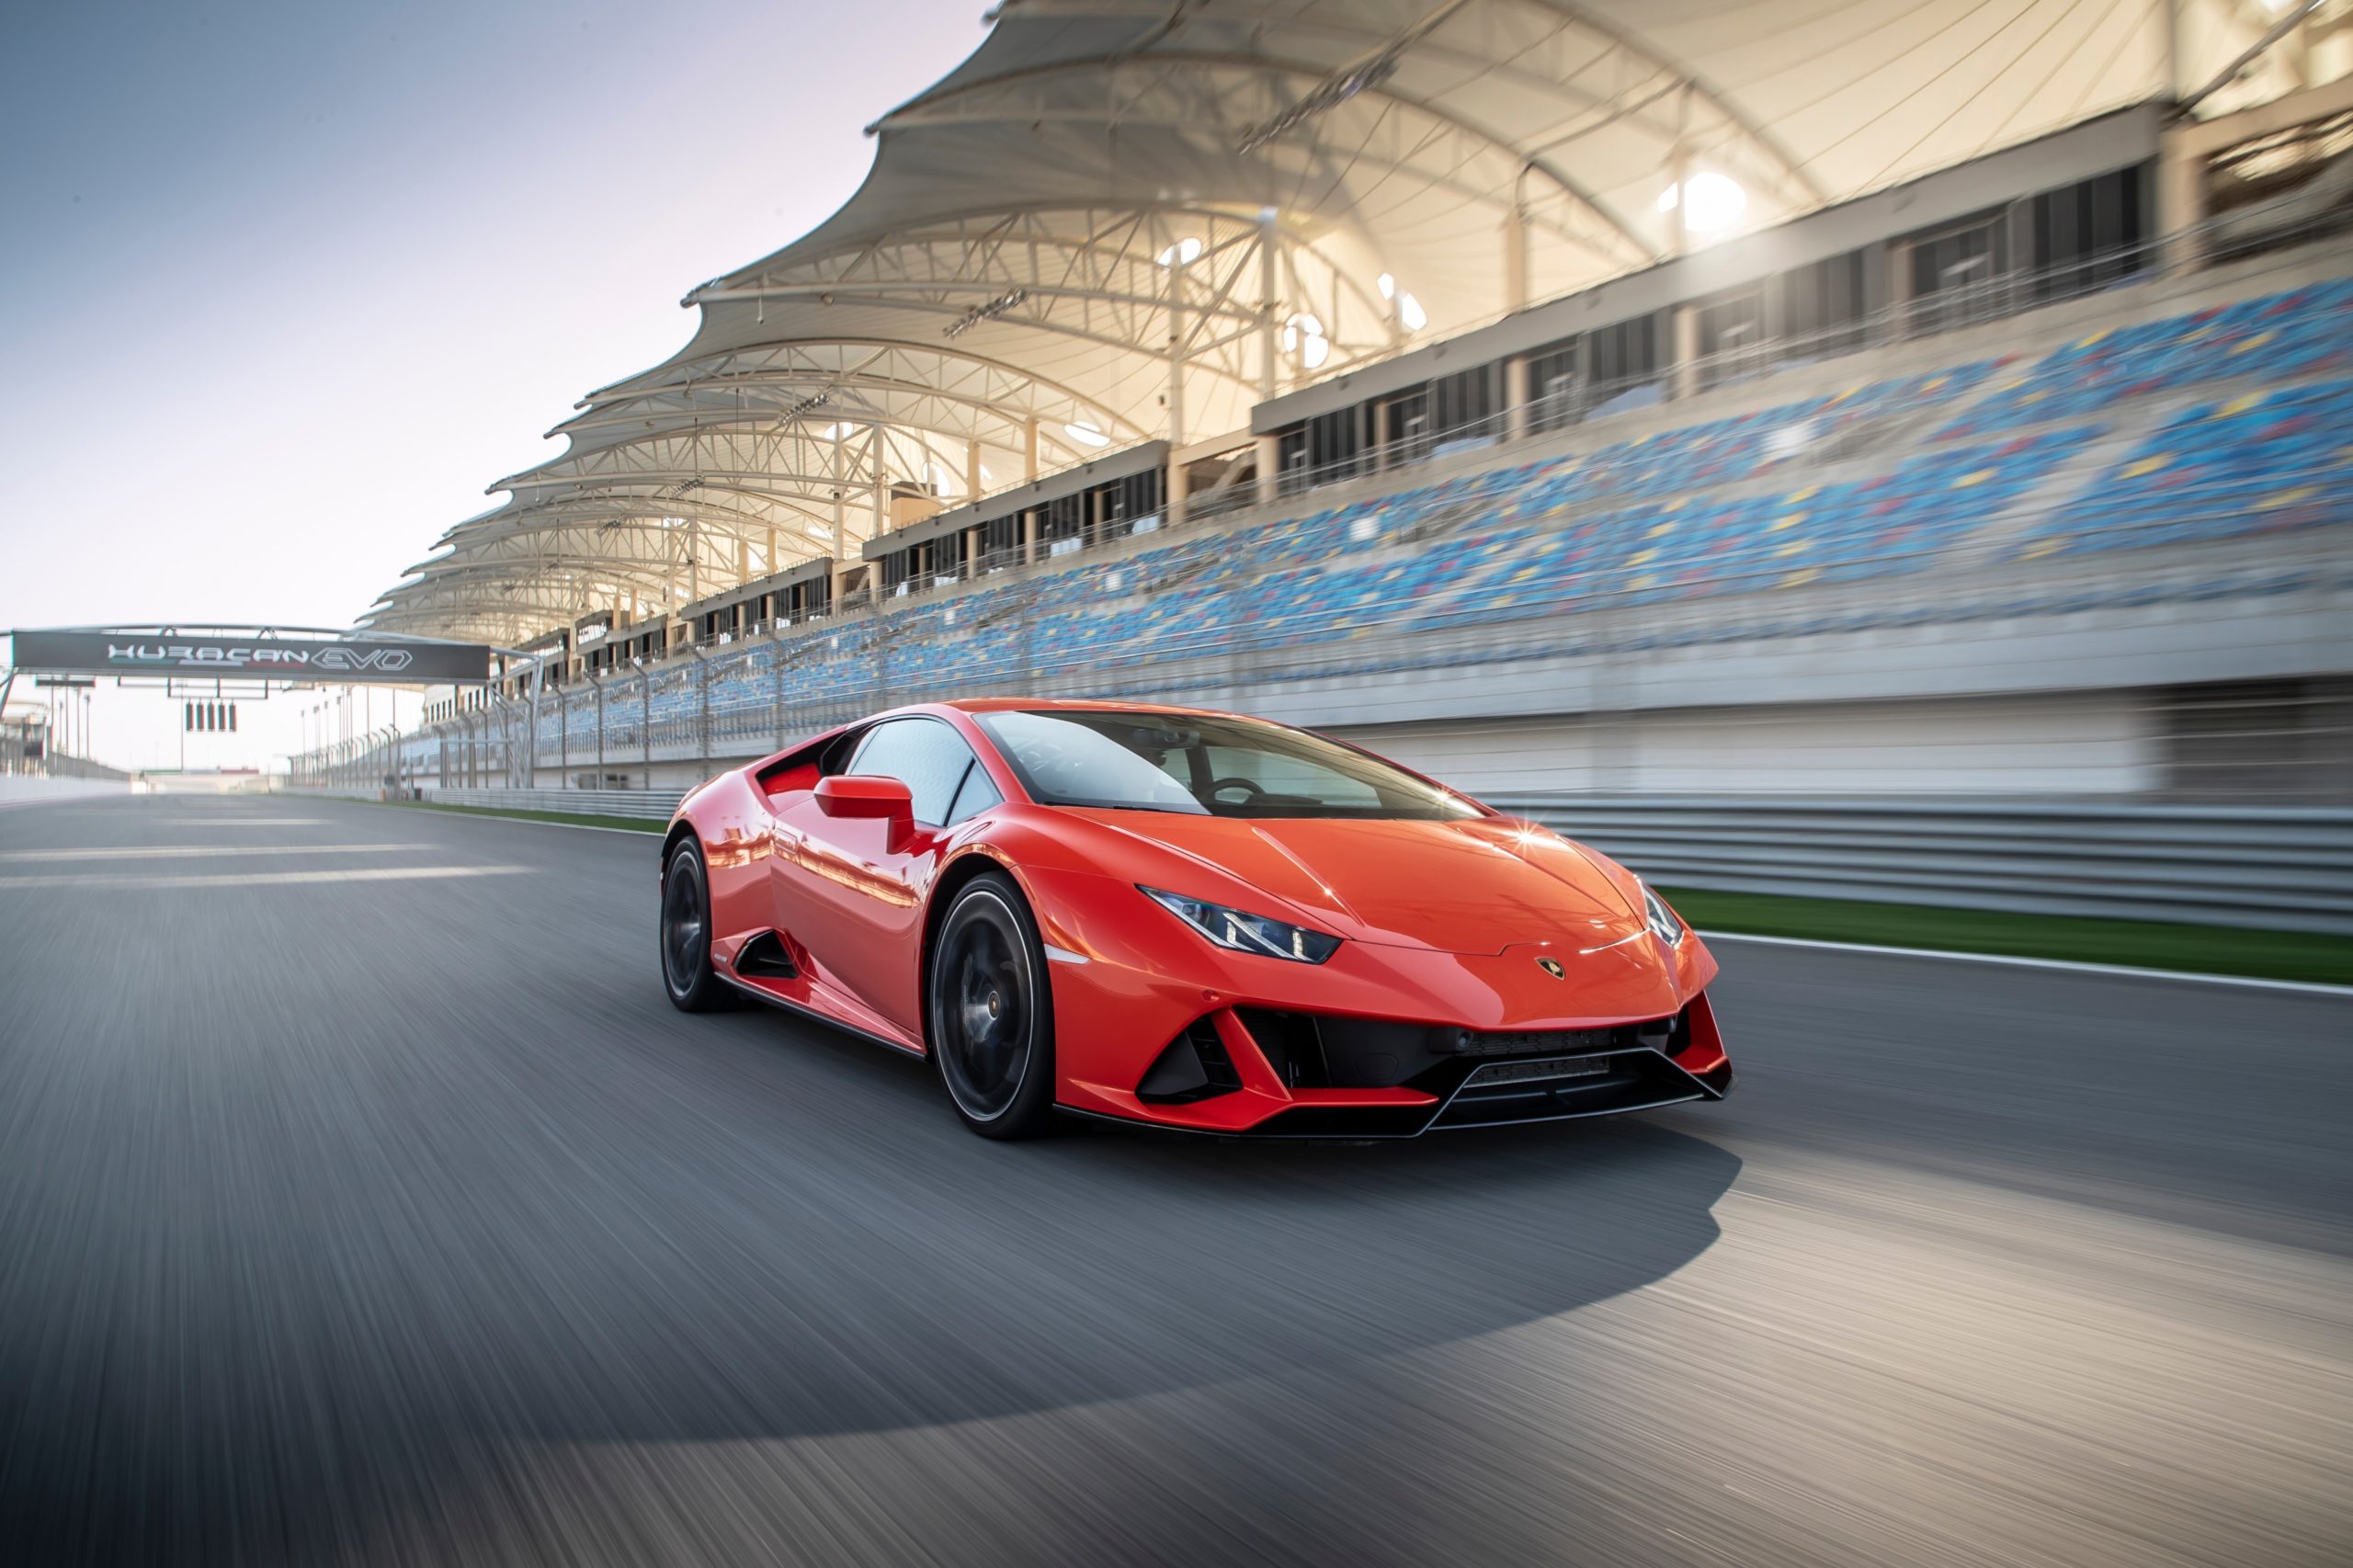 Automobili Lamborghini prepares to restart production | AutoDrift.ae